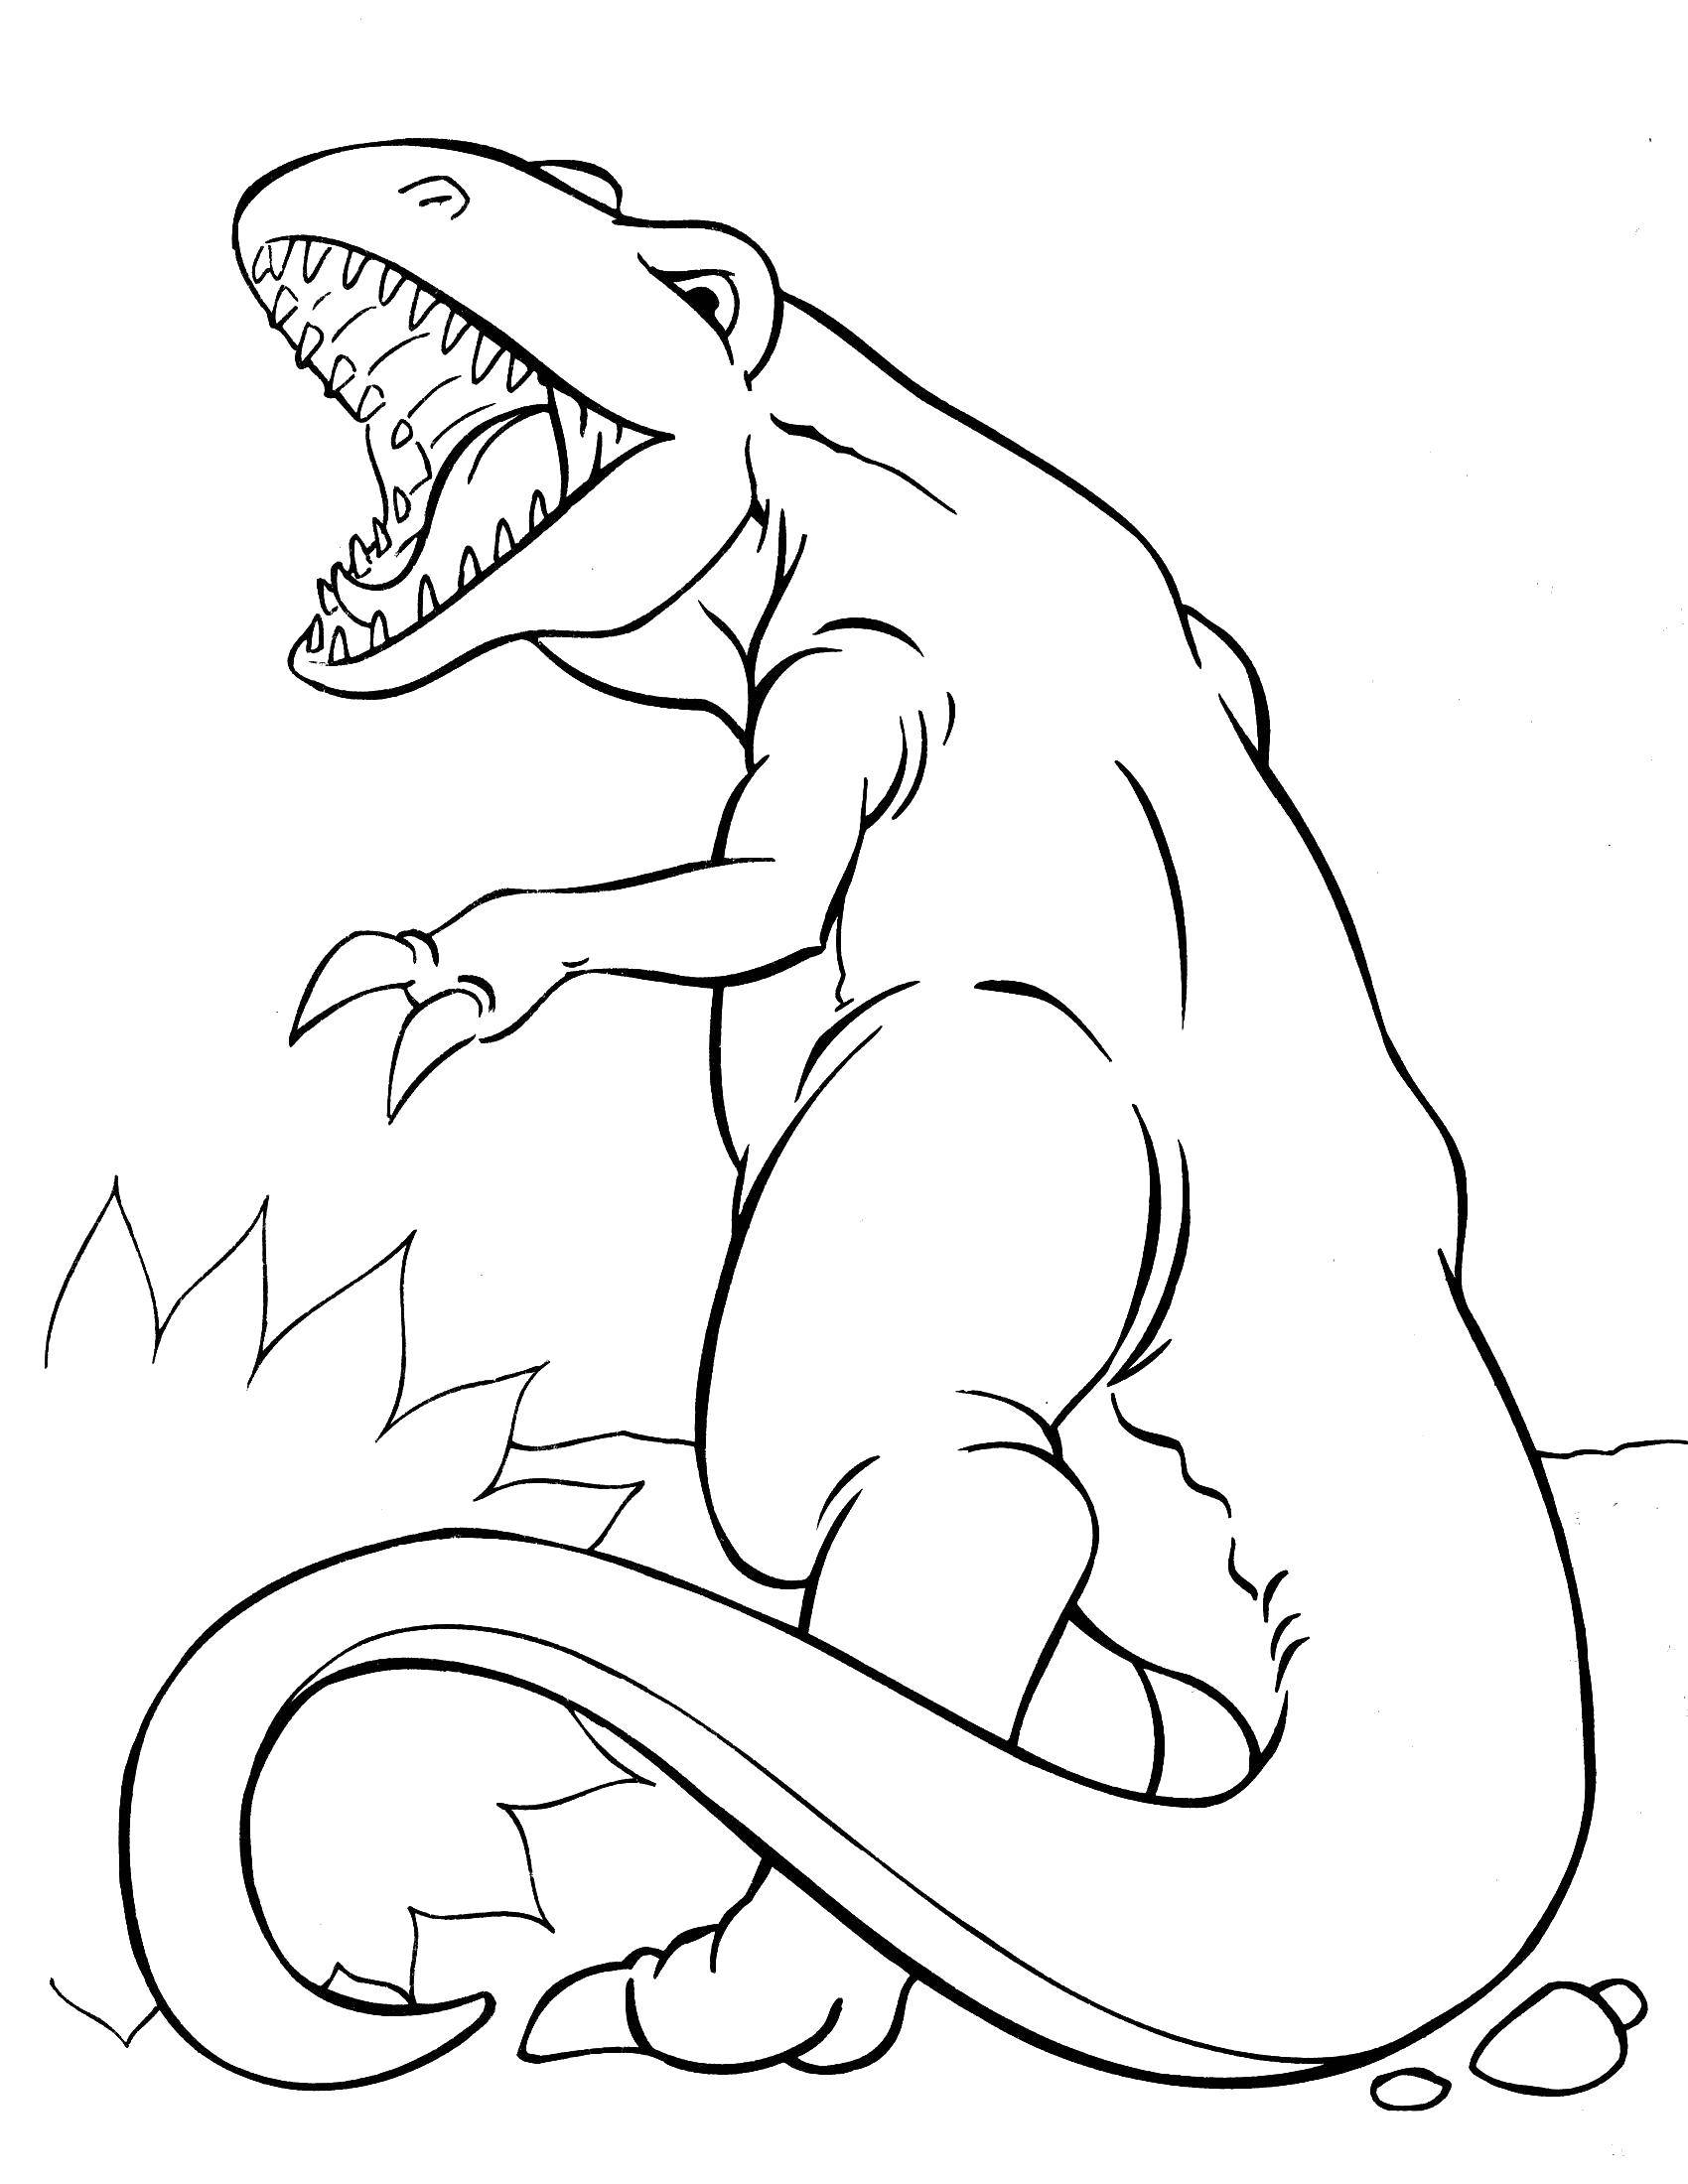 Coloring Short legs, T. Rex. Category dinosaur. Tags:  Dinosaurs, Tyrannosaurus.